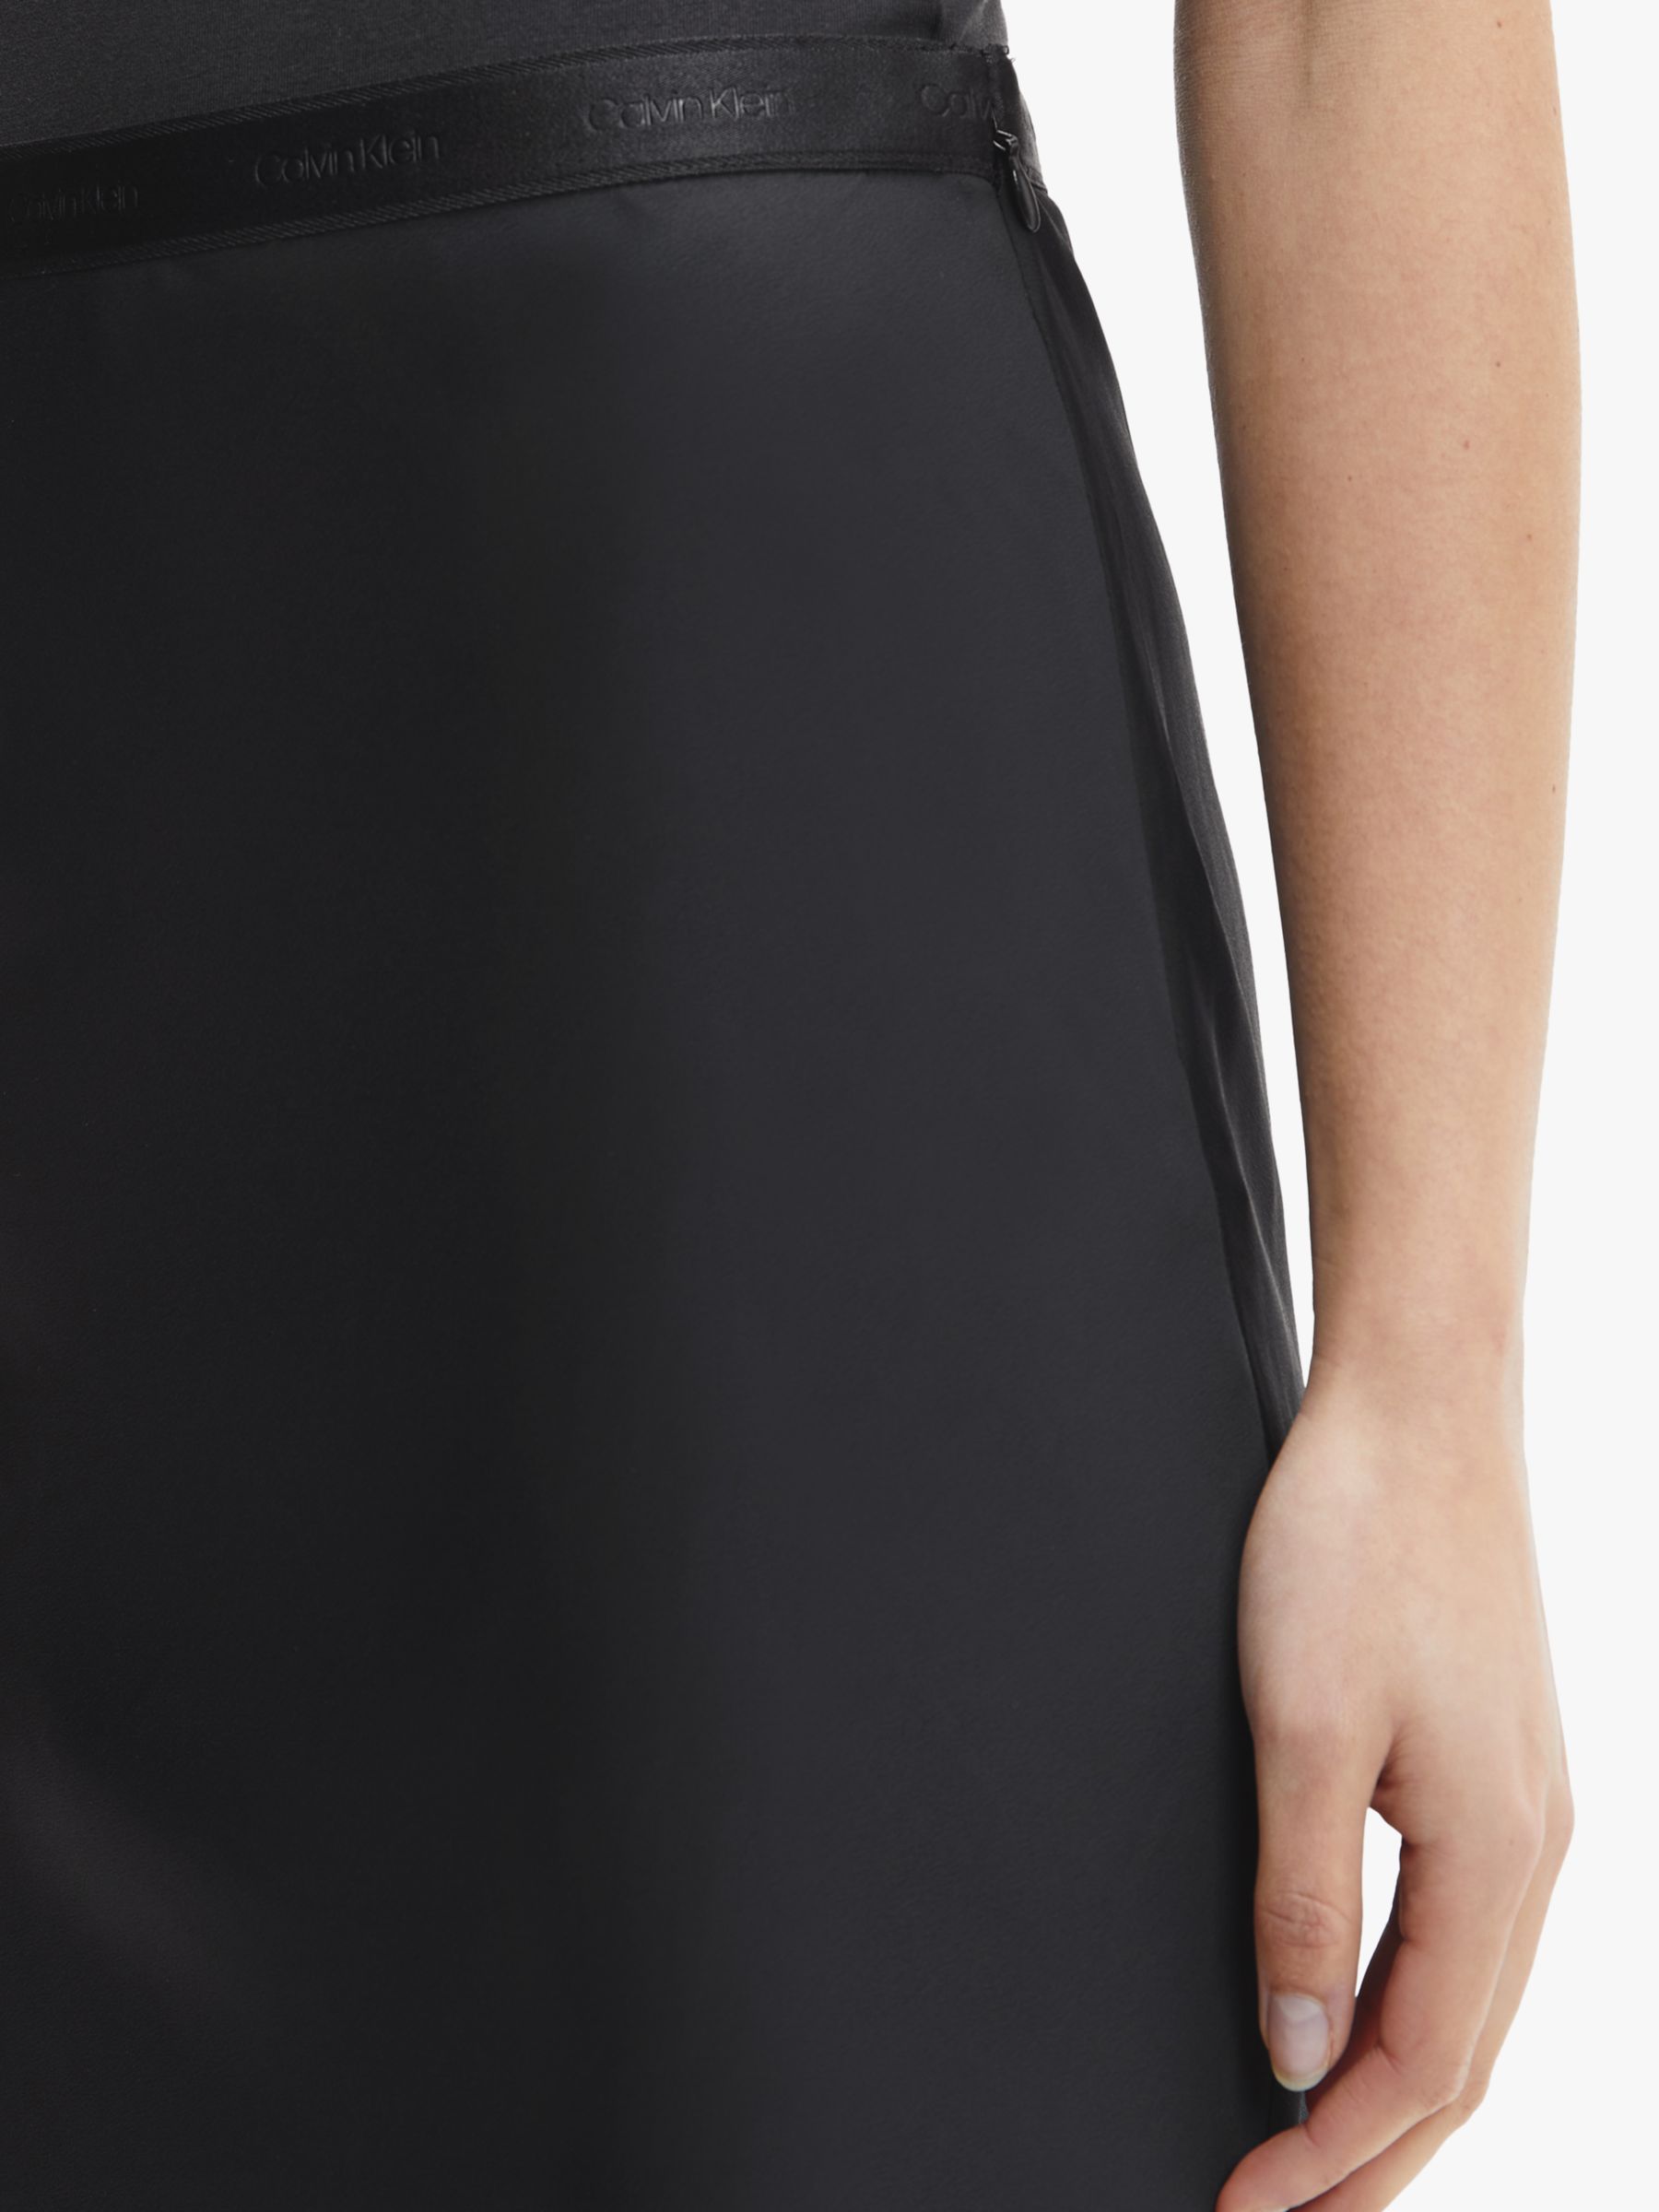 Calvin Klein Bias Partners Black & Midi John Lewis Cut Skirt, at